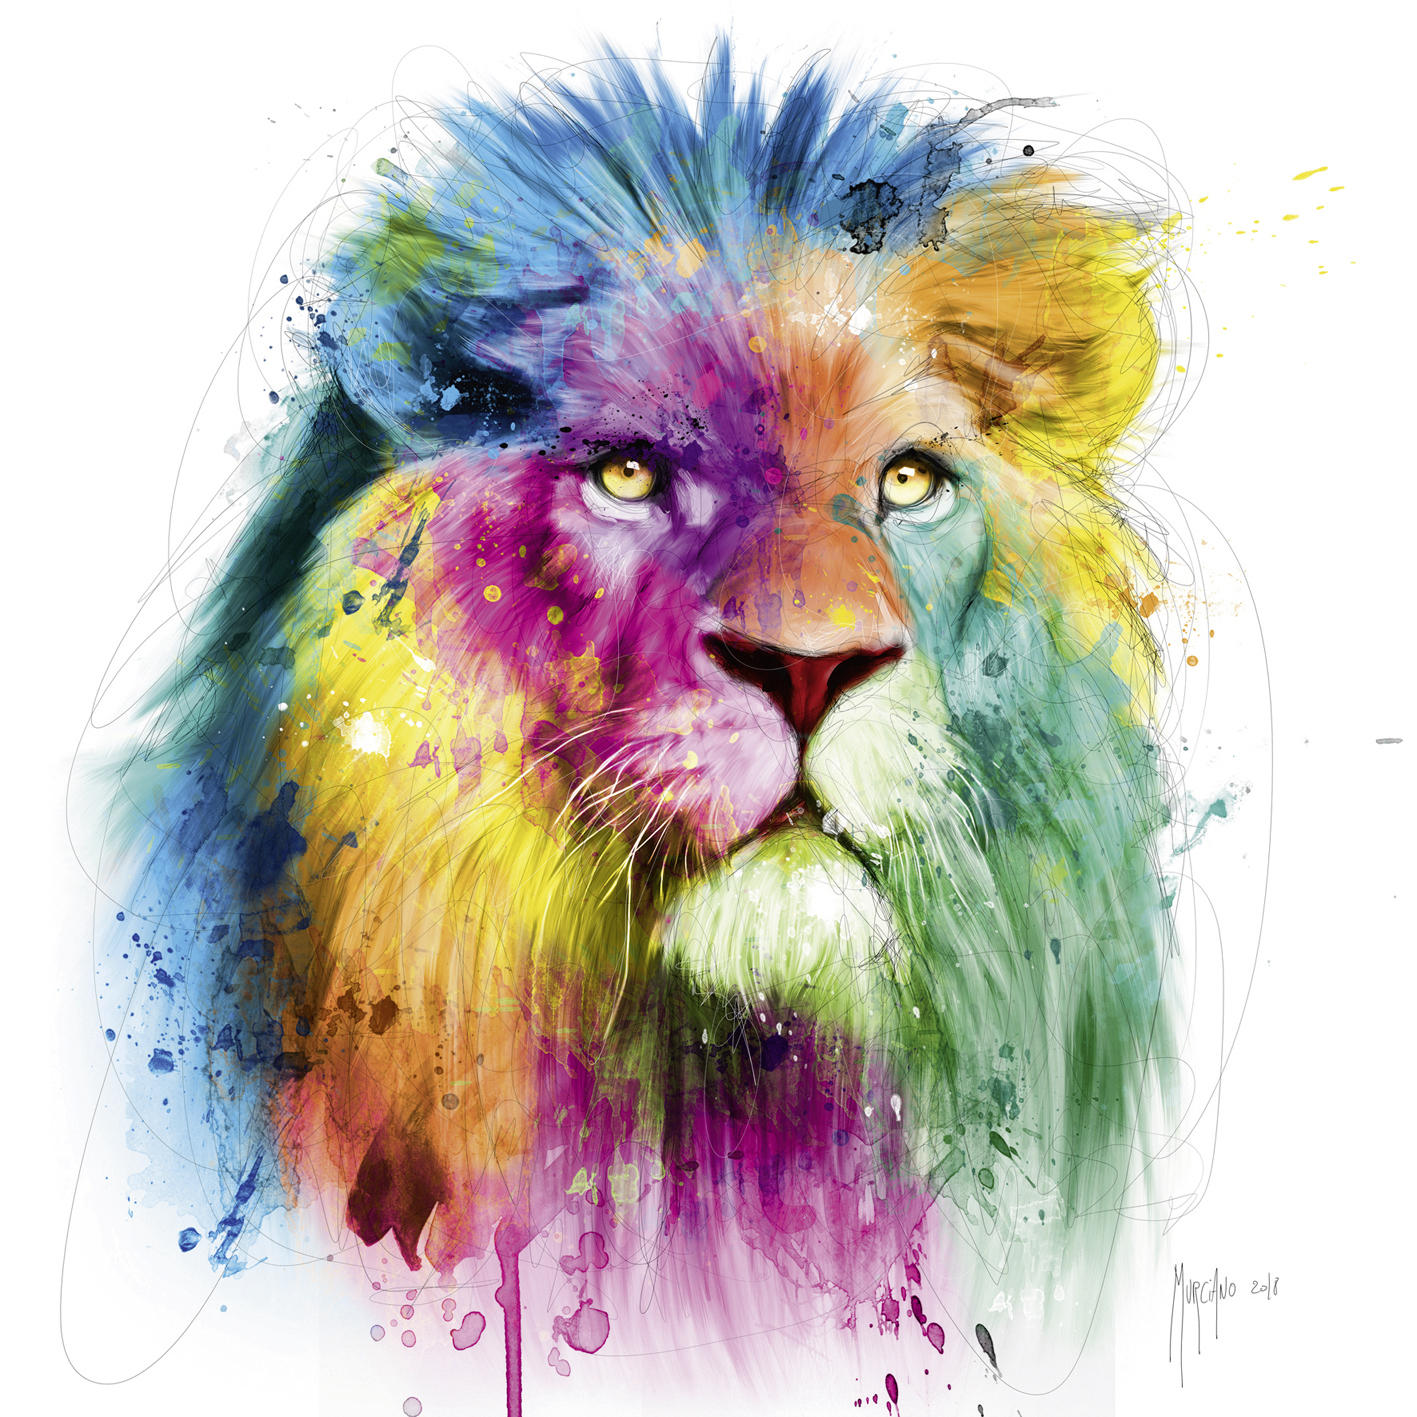 KUNSTDRUCK Tiere Lion  - Blau/Pink, Basics, Papier (50/50cm) - Monee